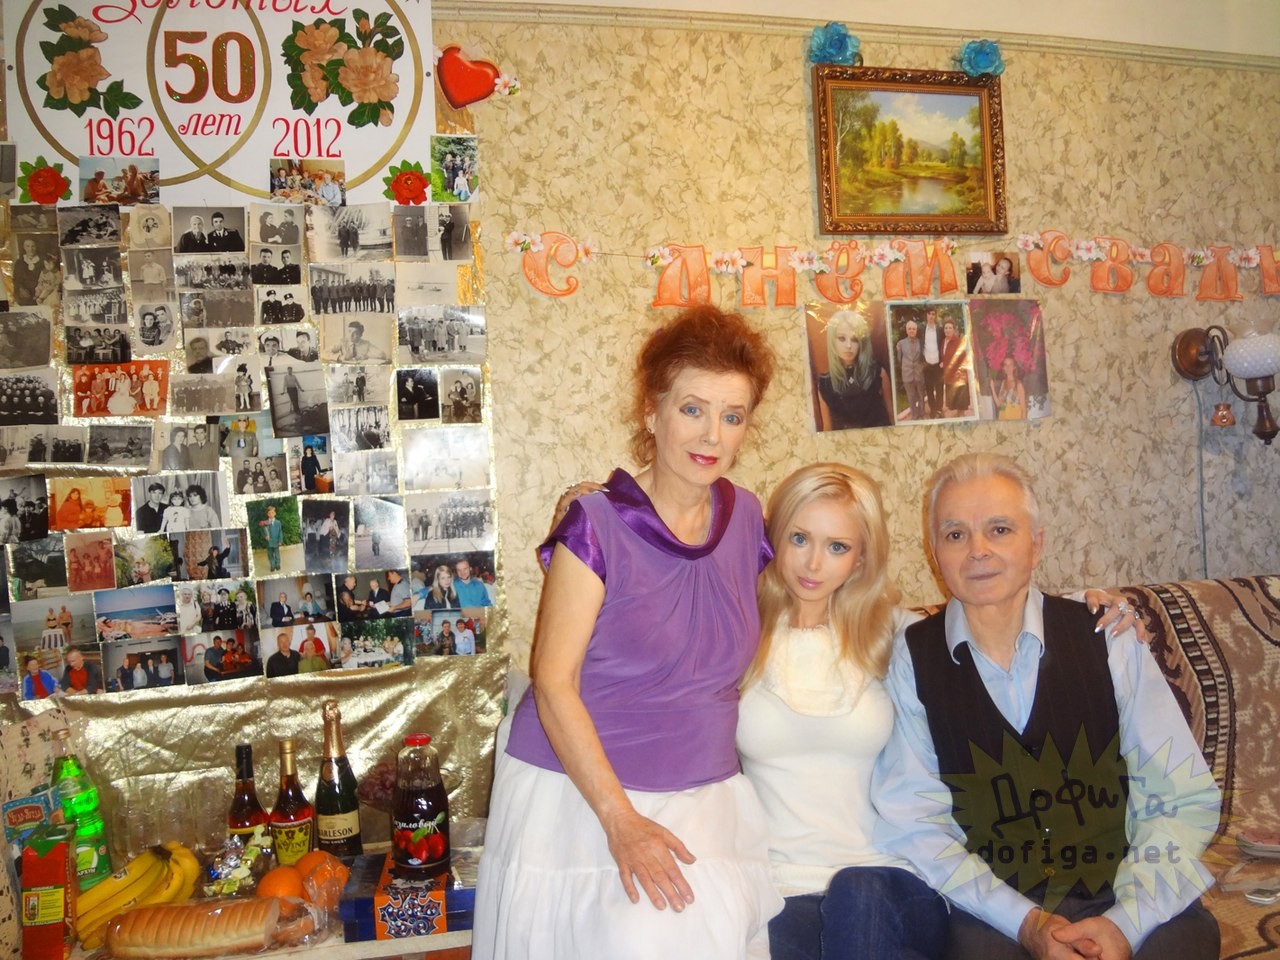 Real-Life Barbie Valeria Lukyanova With Her Grandparents